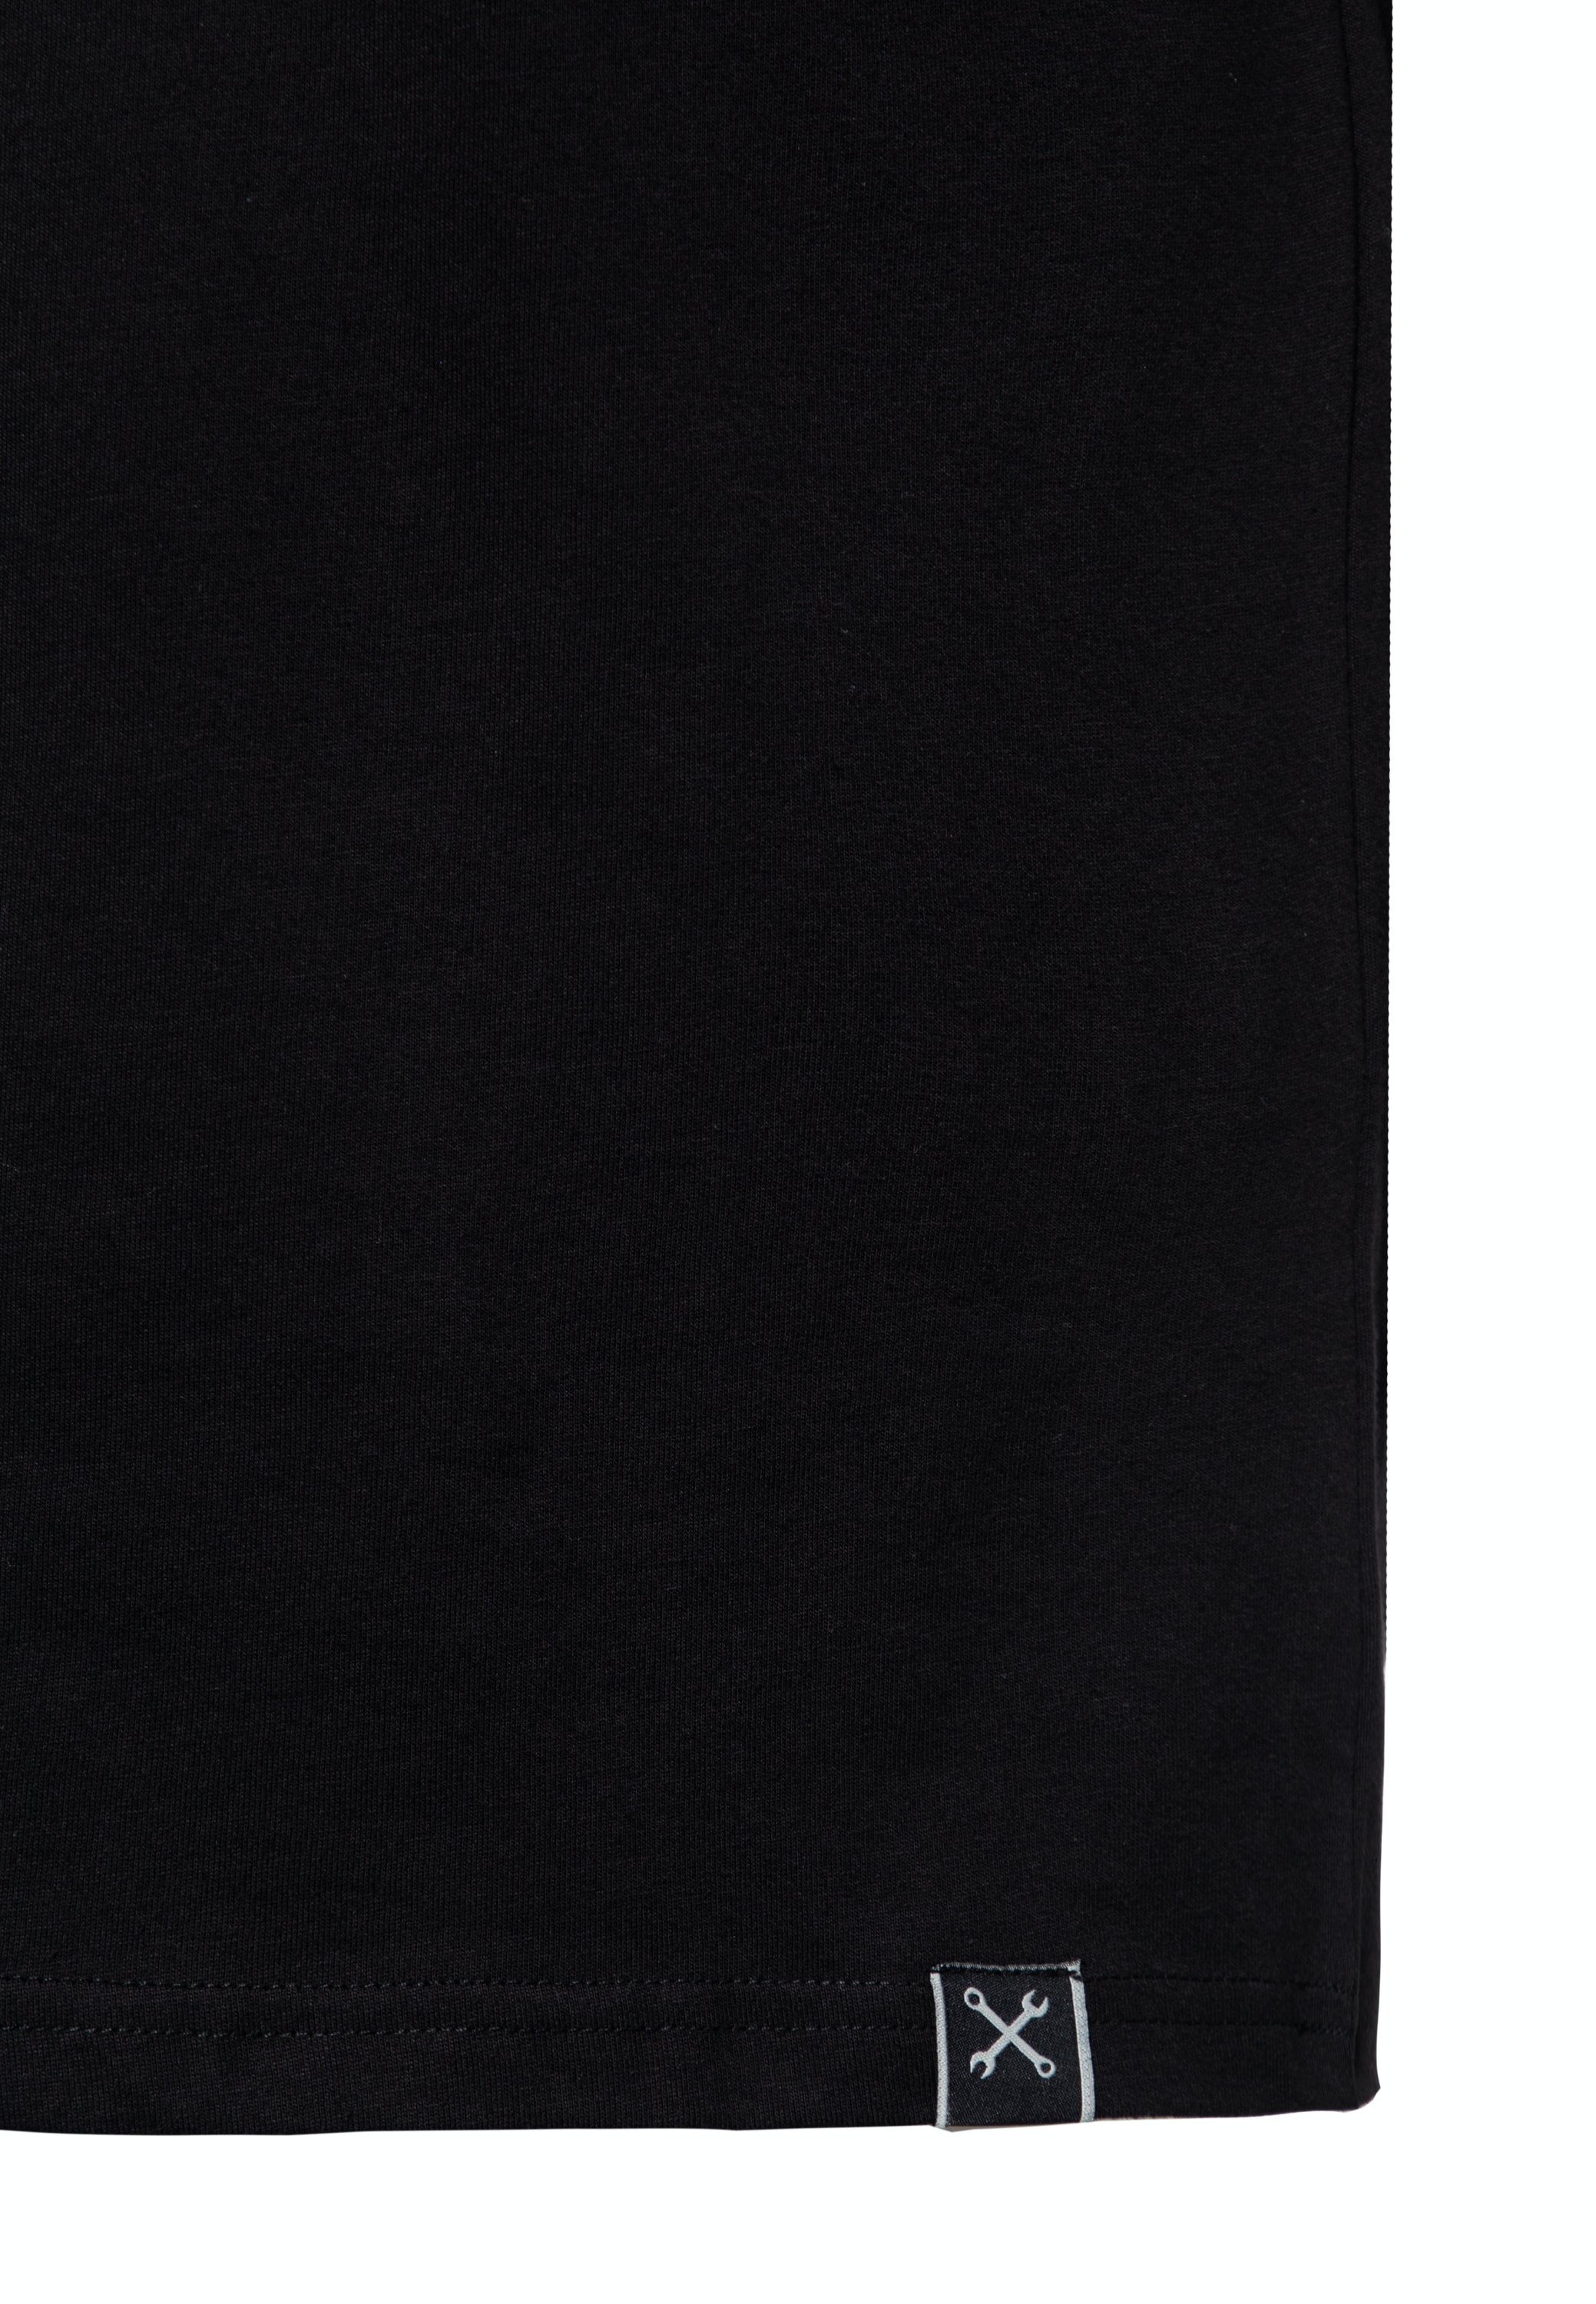 Tiki Shop Surf KingKerosin Front black Design Retro "Tikki-Surf" (1-tlg) mit Print-Shirt im Print